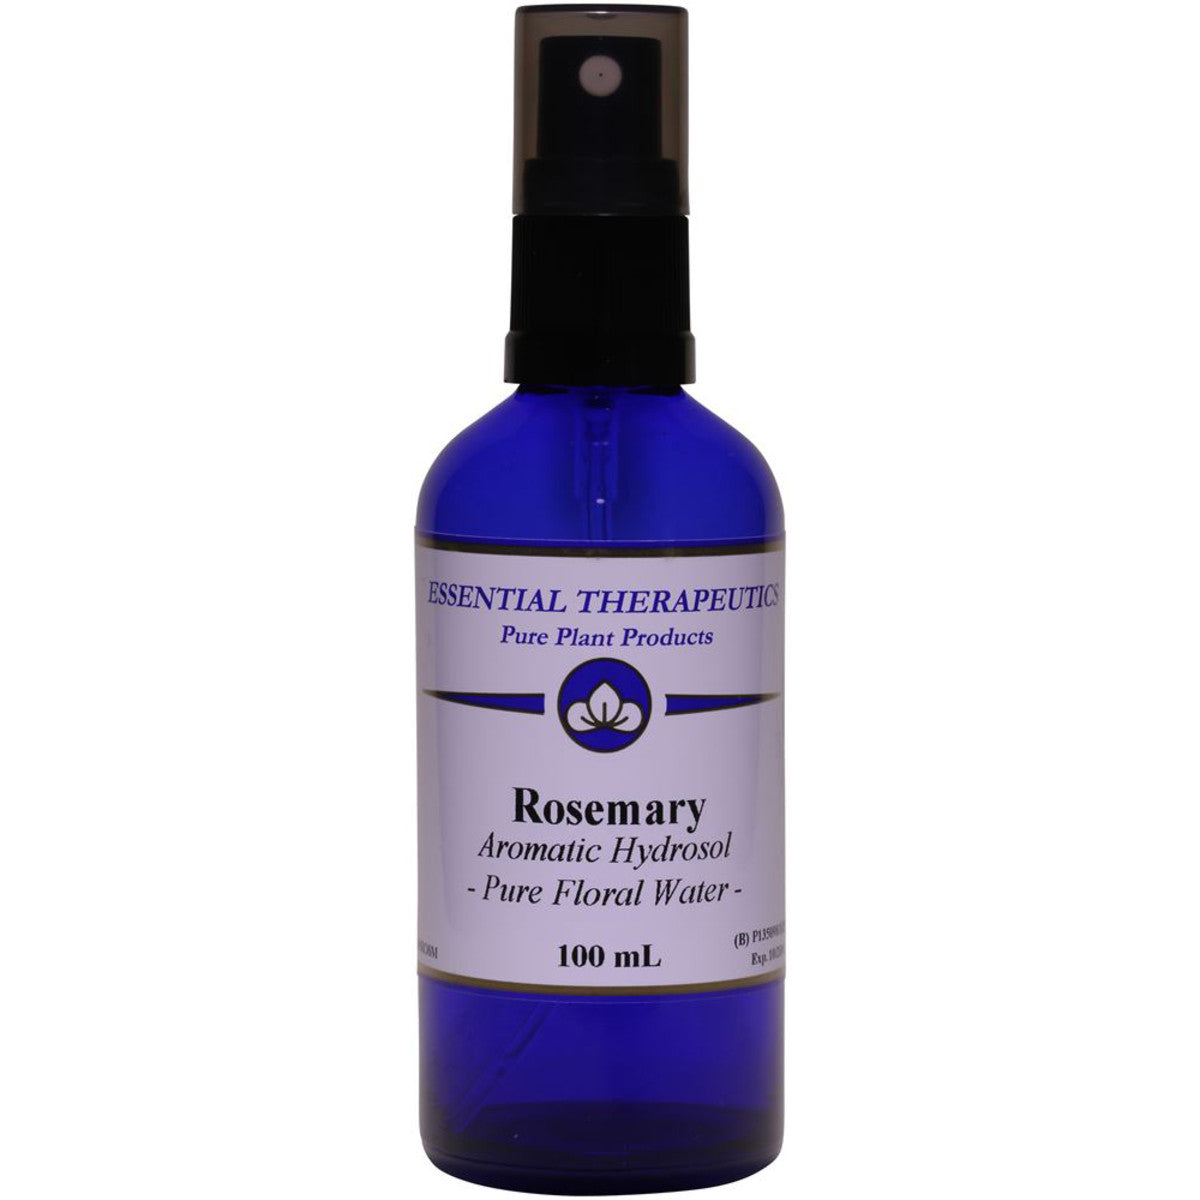 Essential Therapeutic - Aromatic Hydrosol Rosemary 100ml